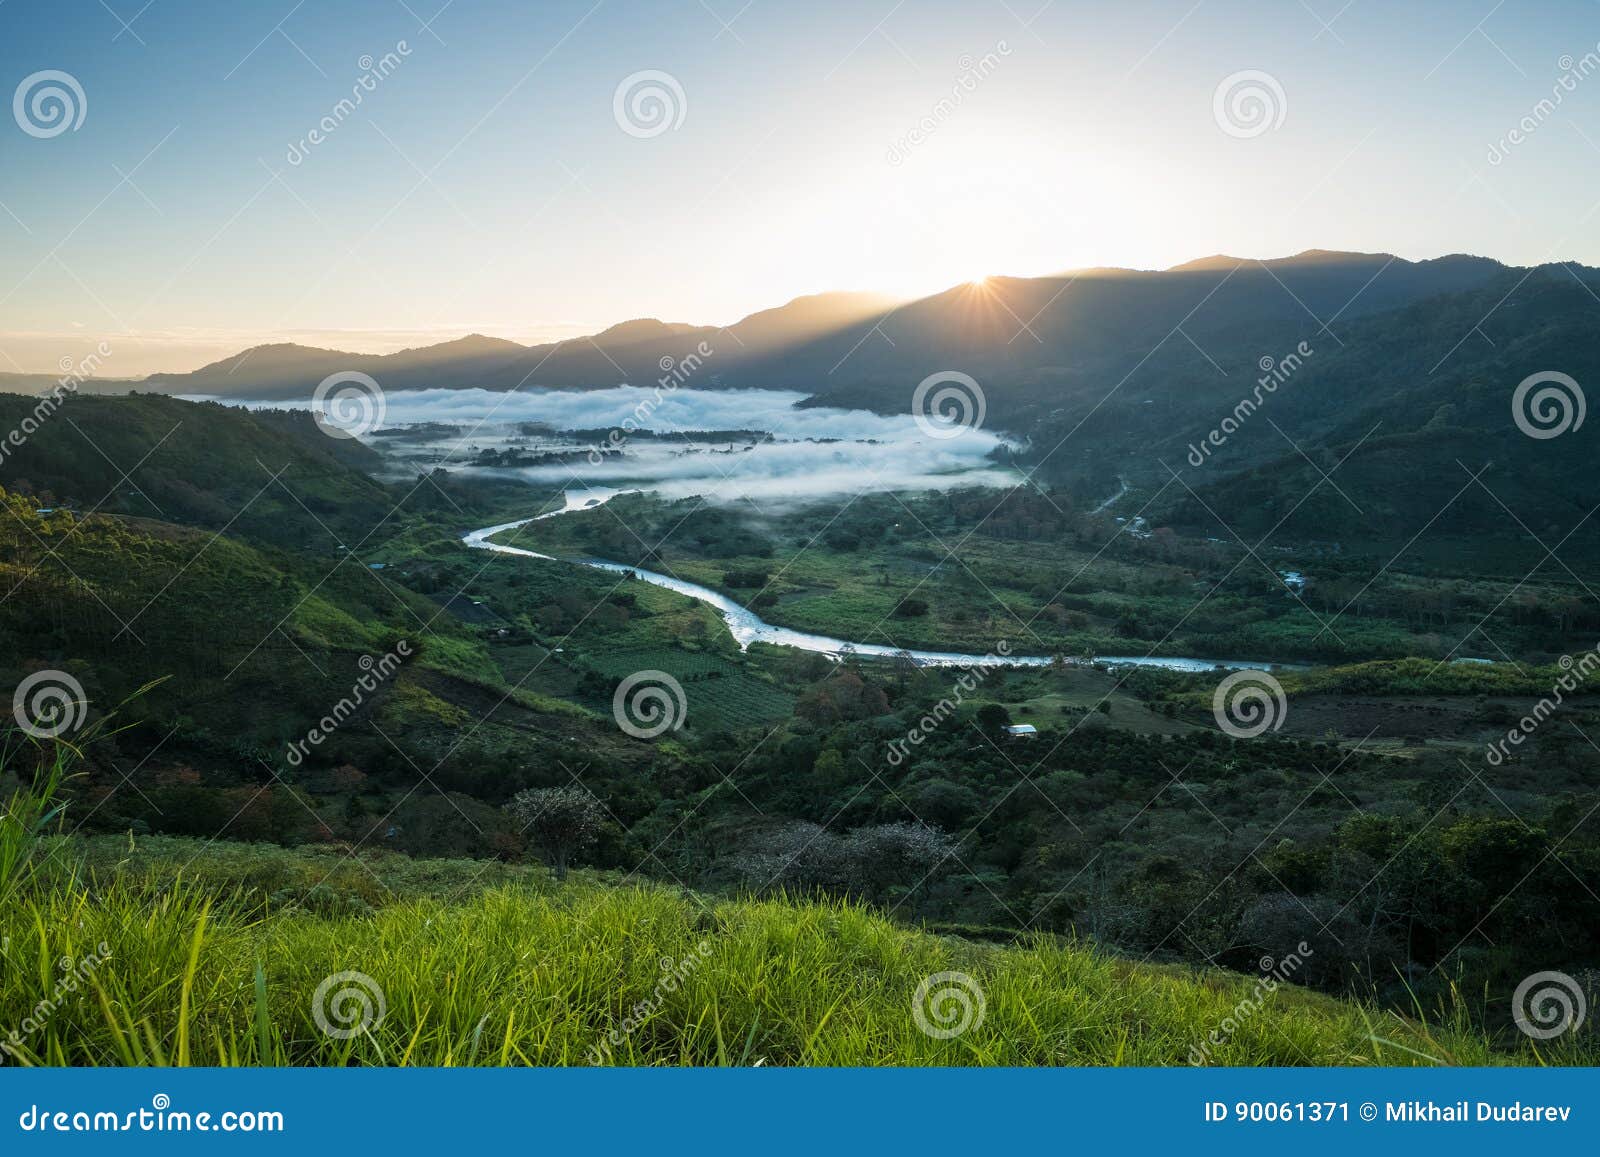 valley of orosi at sunrise